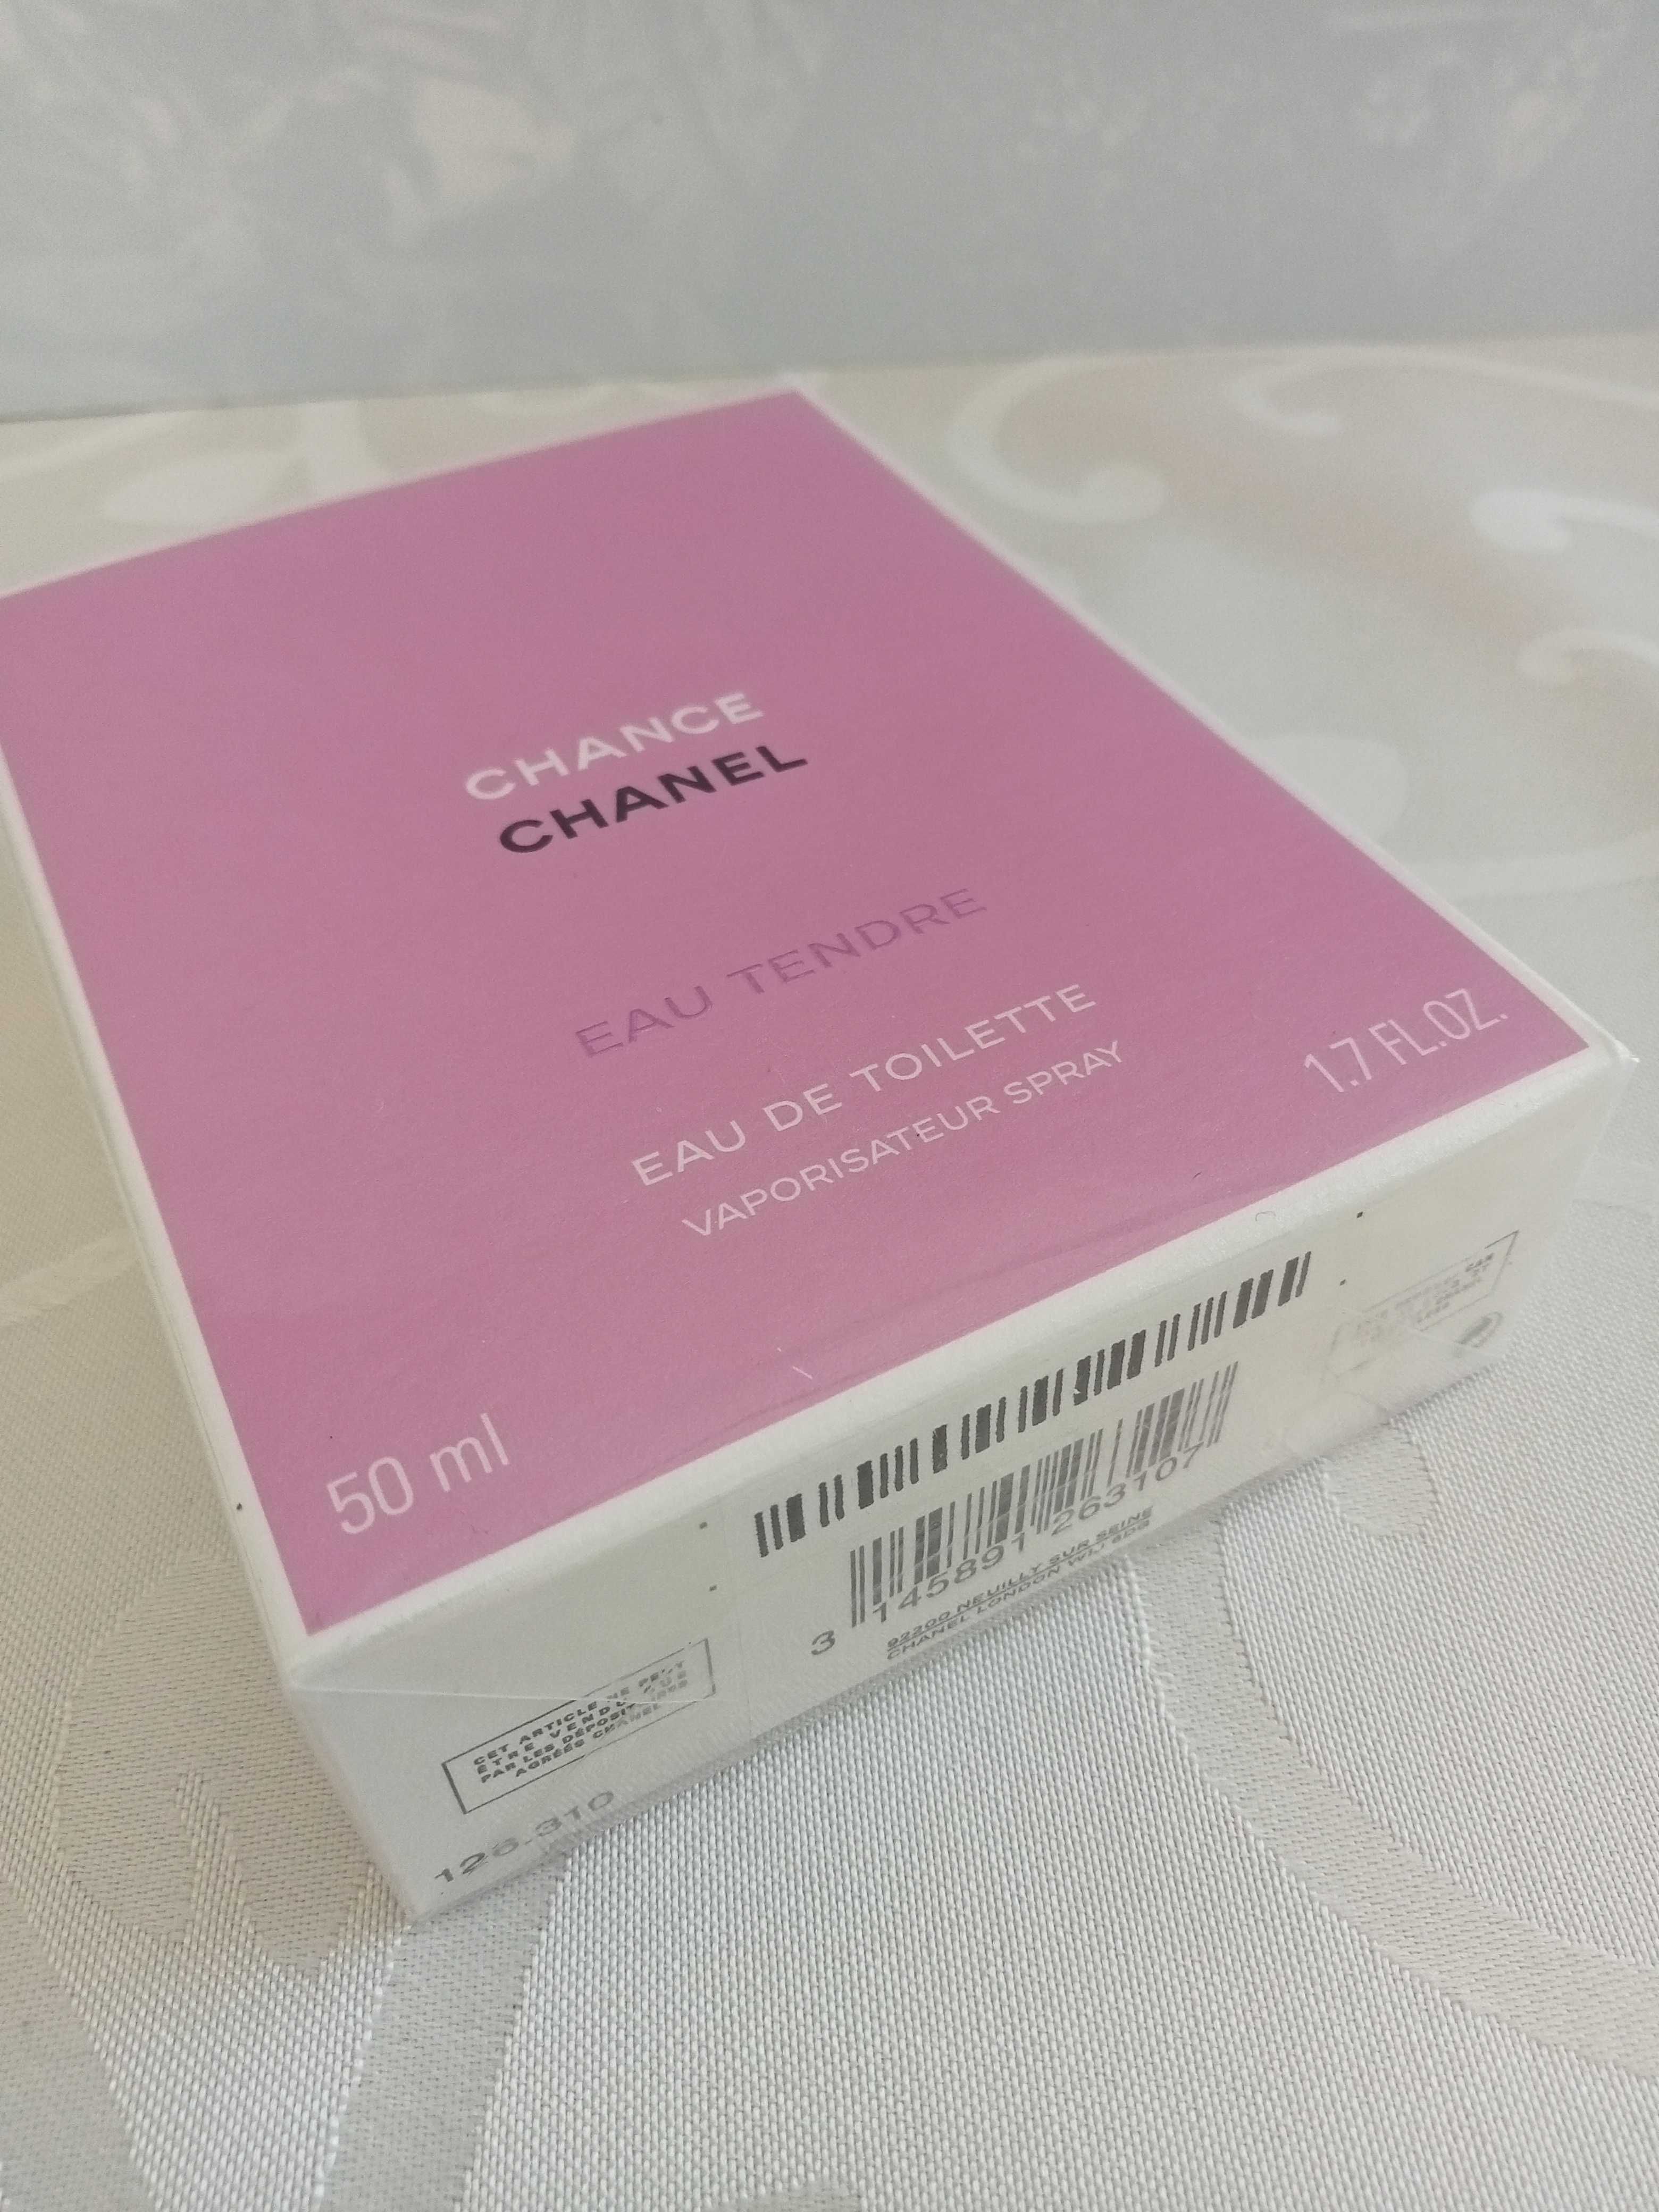 Chanel Chance Eau Tendre woda toaletowa 50ml